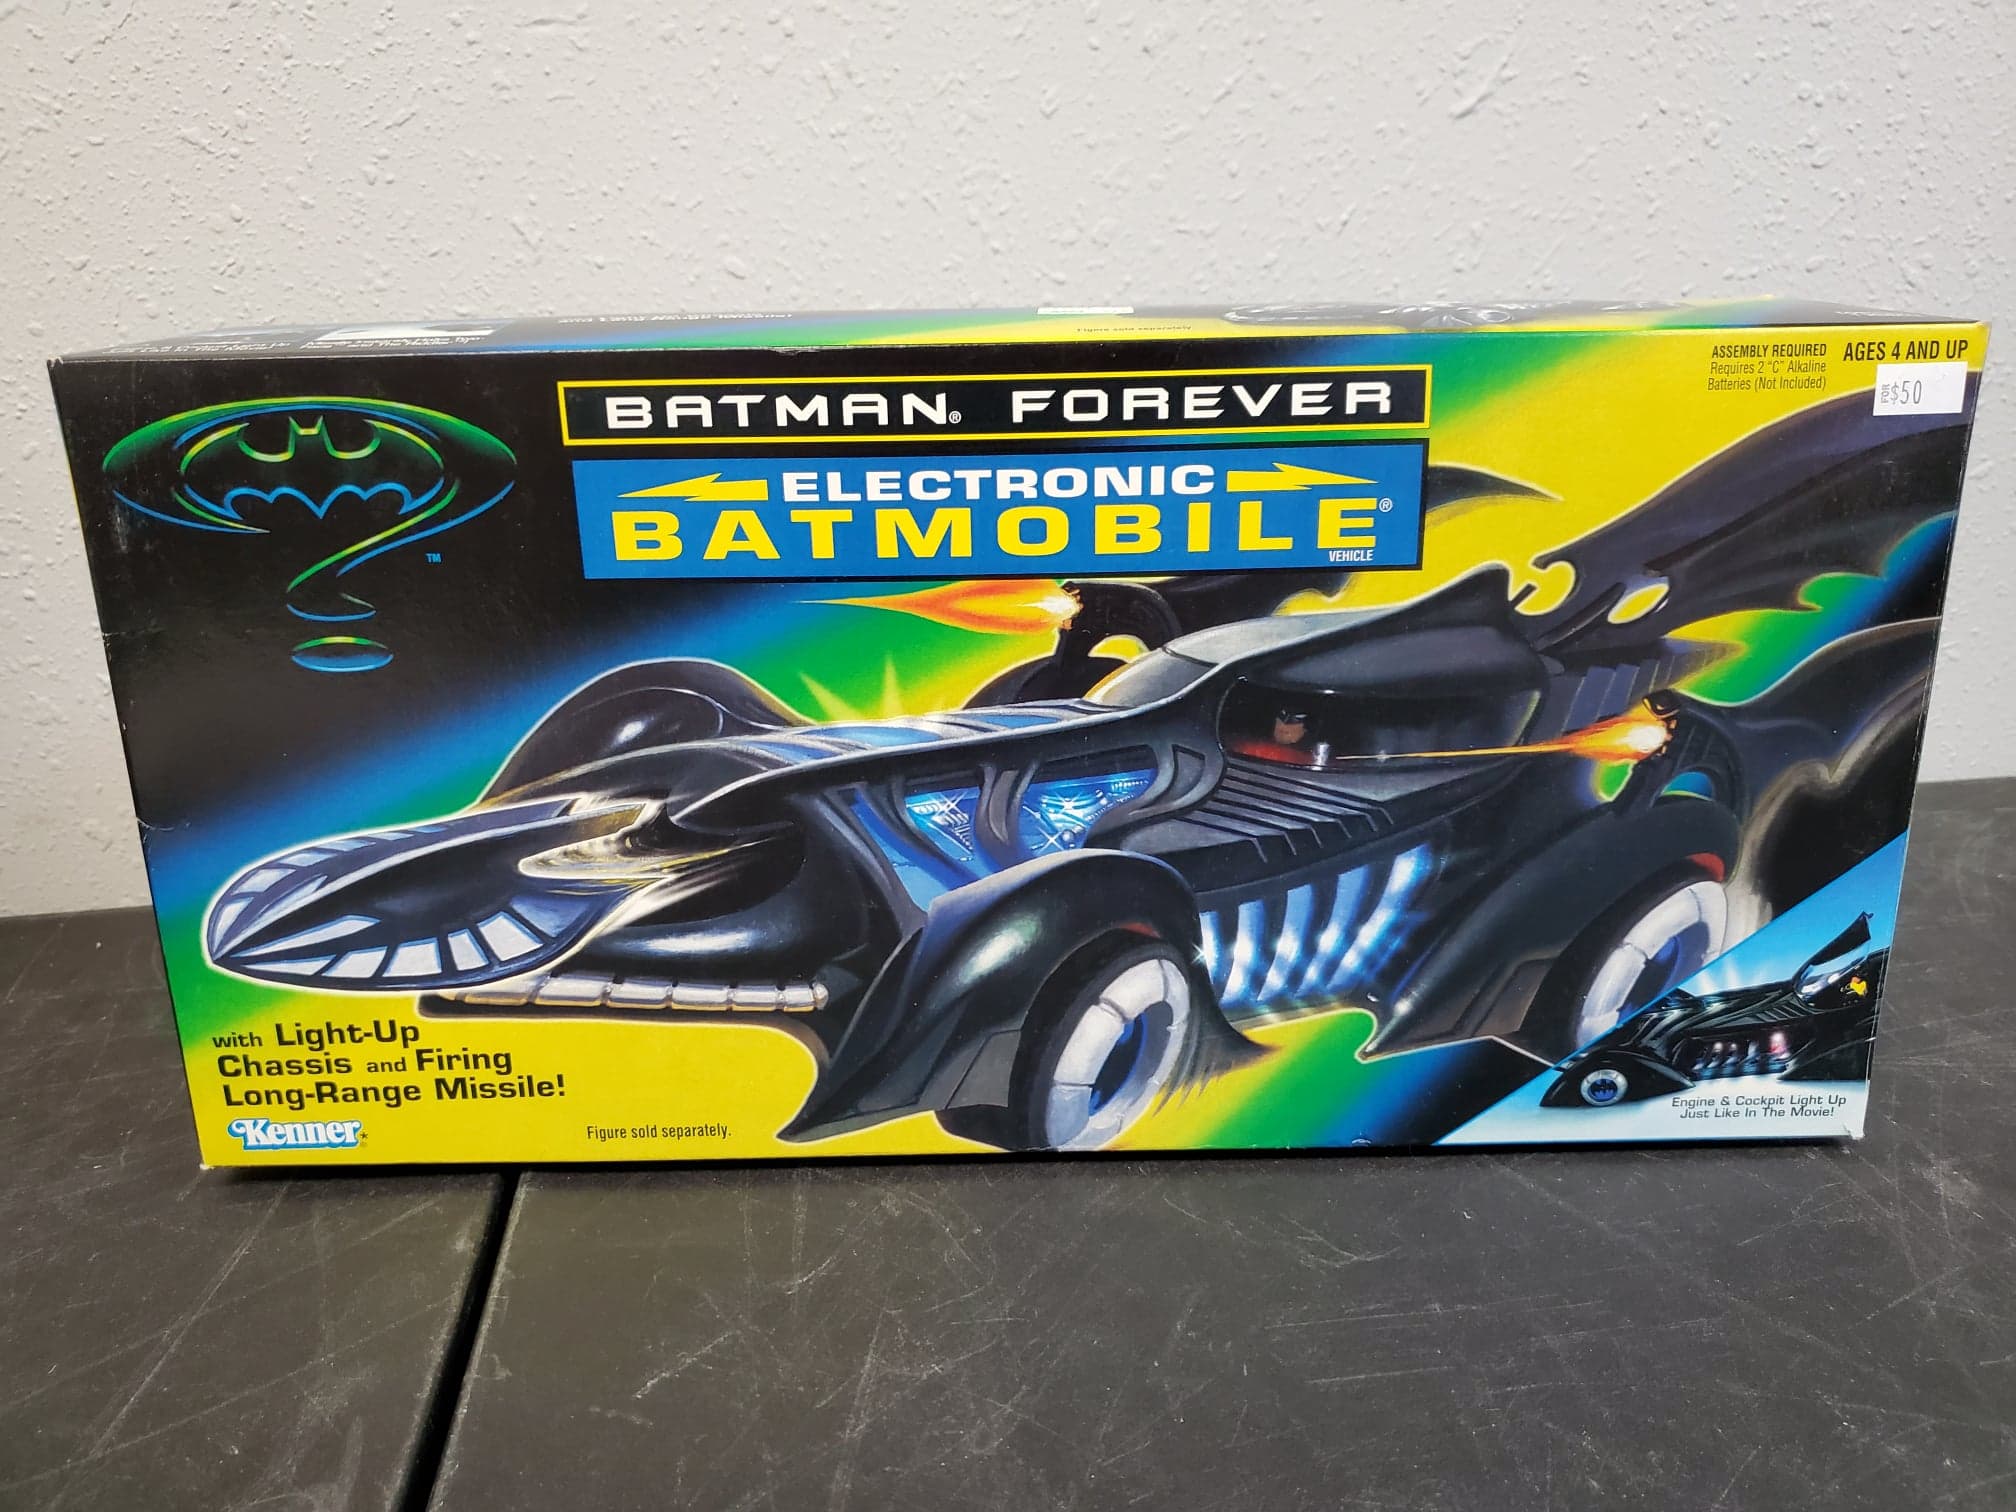 Batman Forever Electronic Batmobile - Vintage Toy Mall